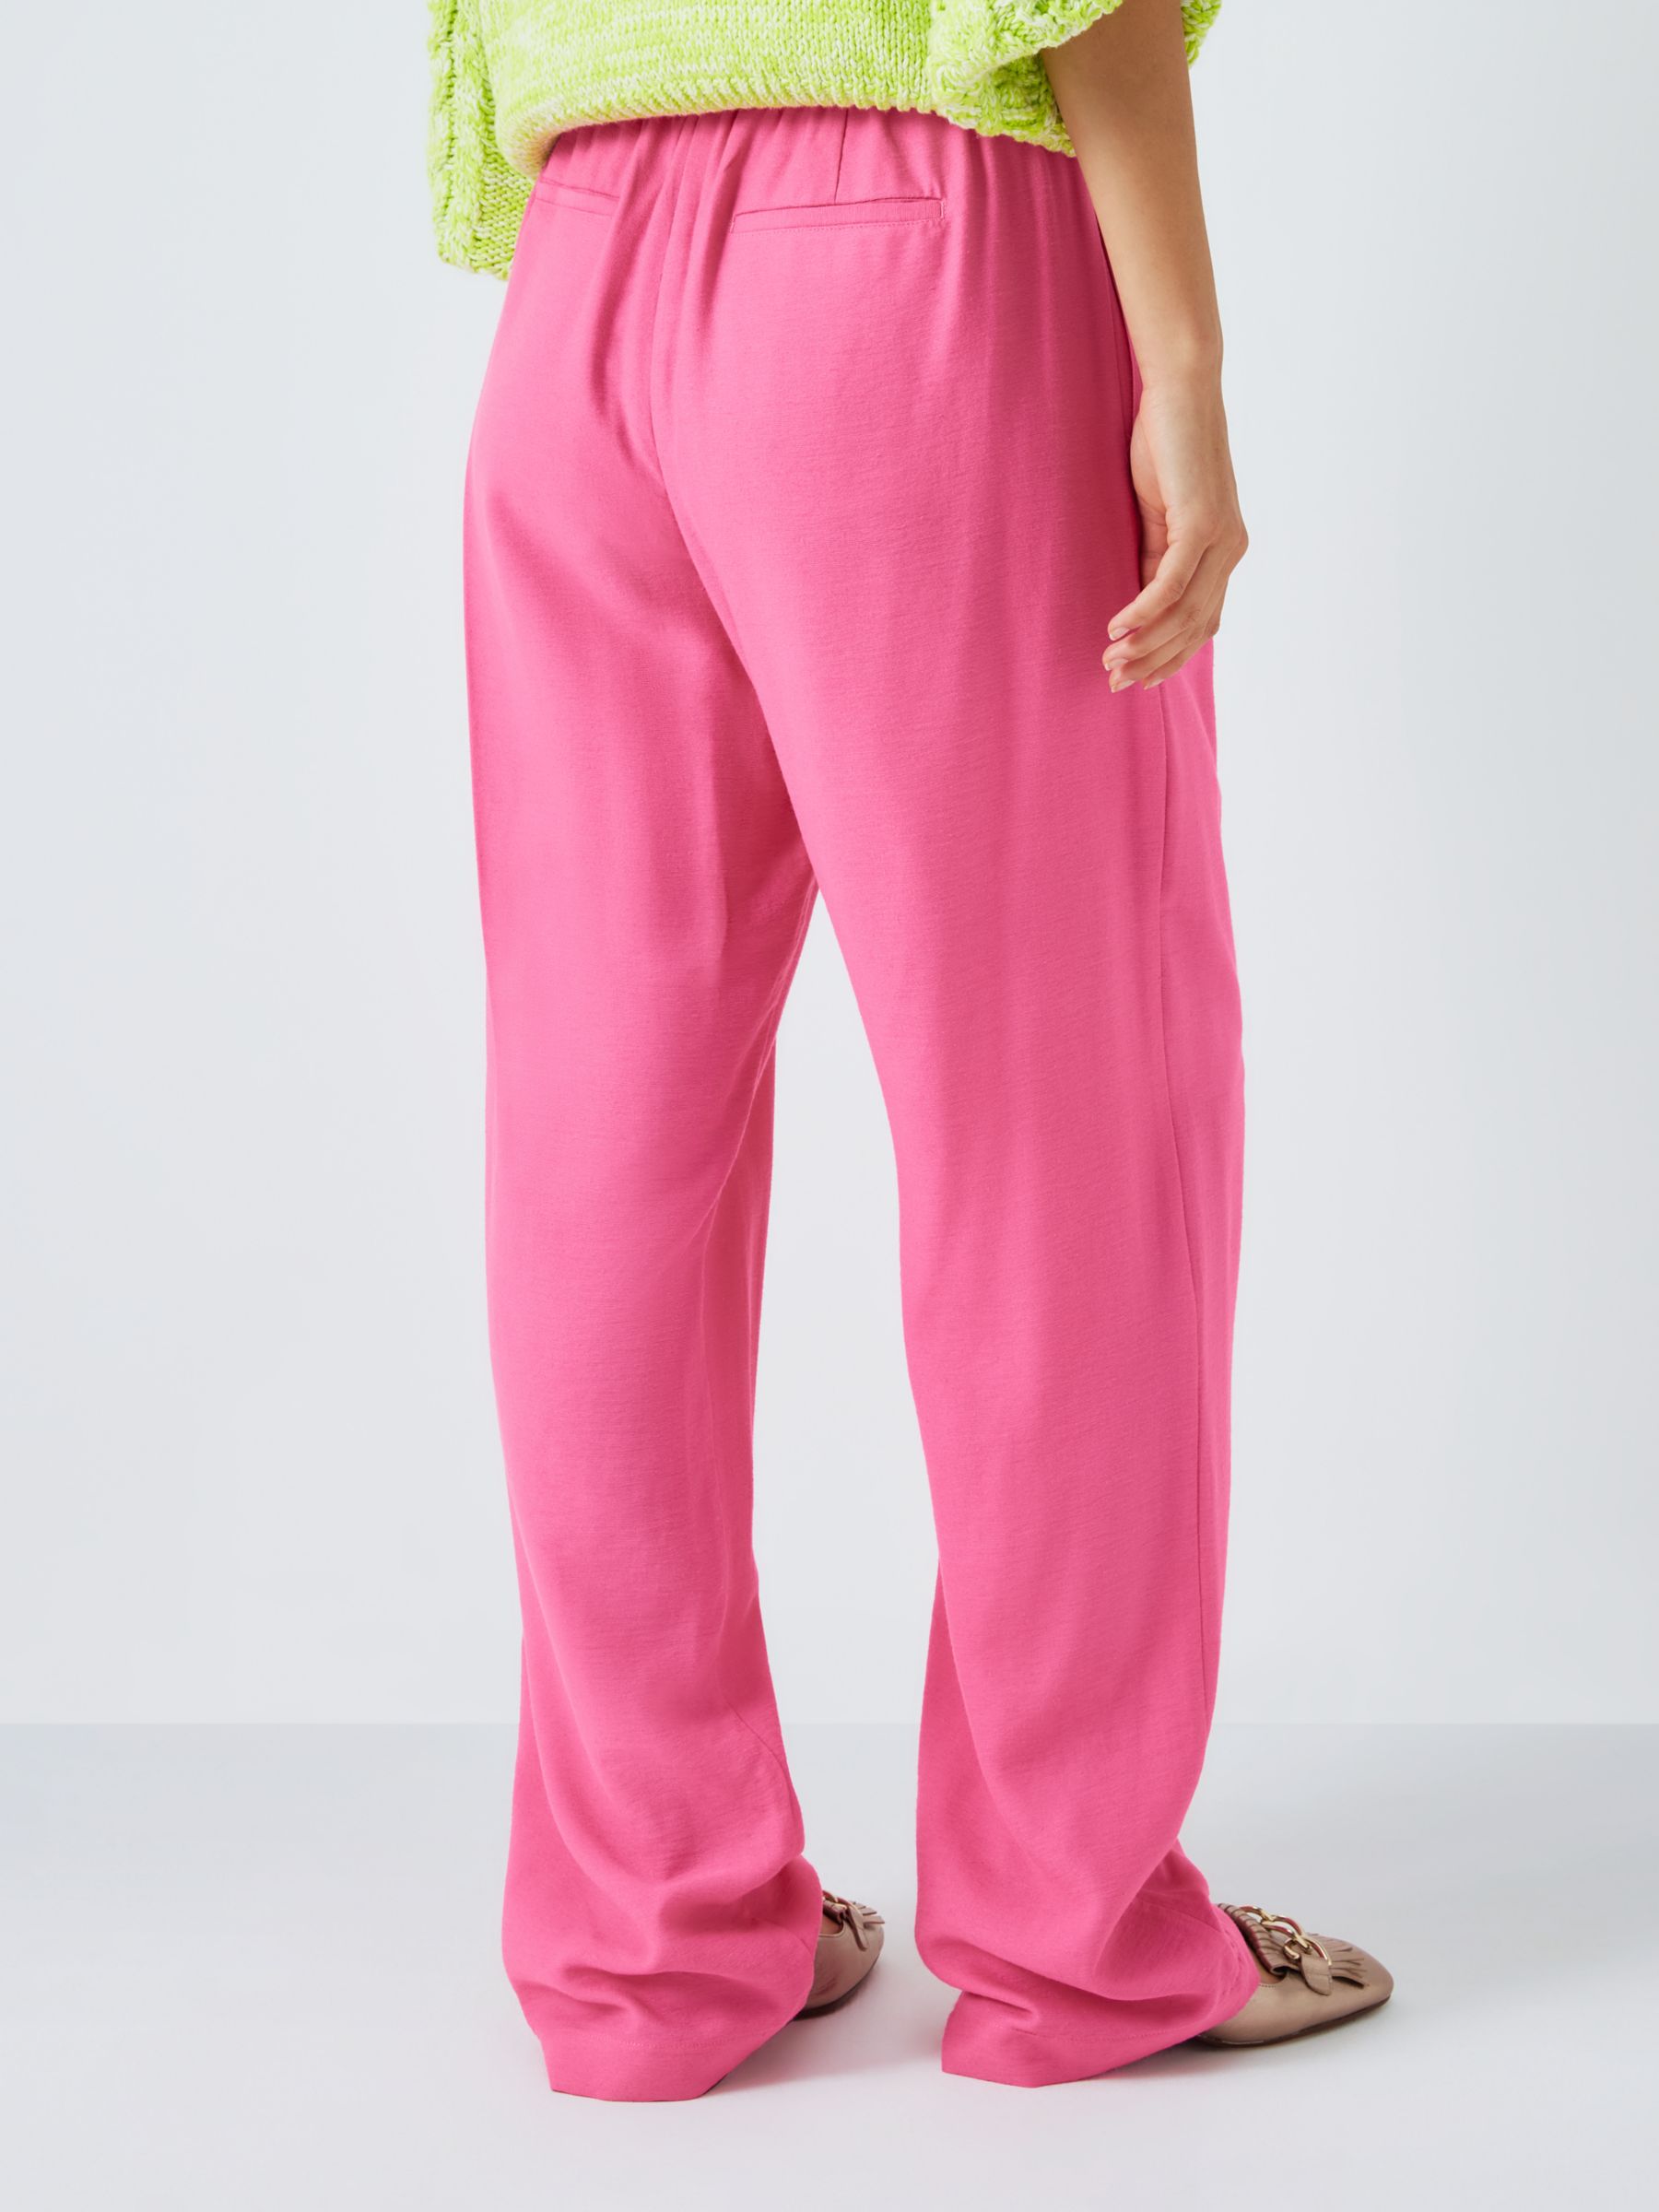 Fabienne Chapot Neale Trousers, Pink Candy, 38